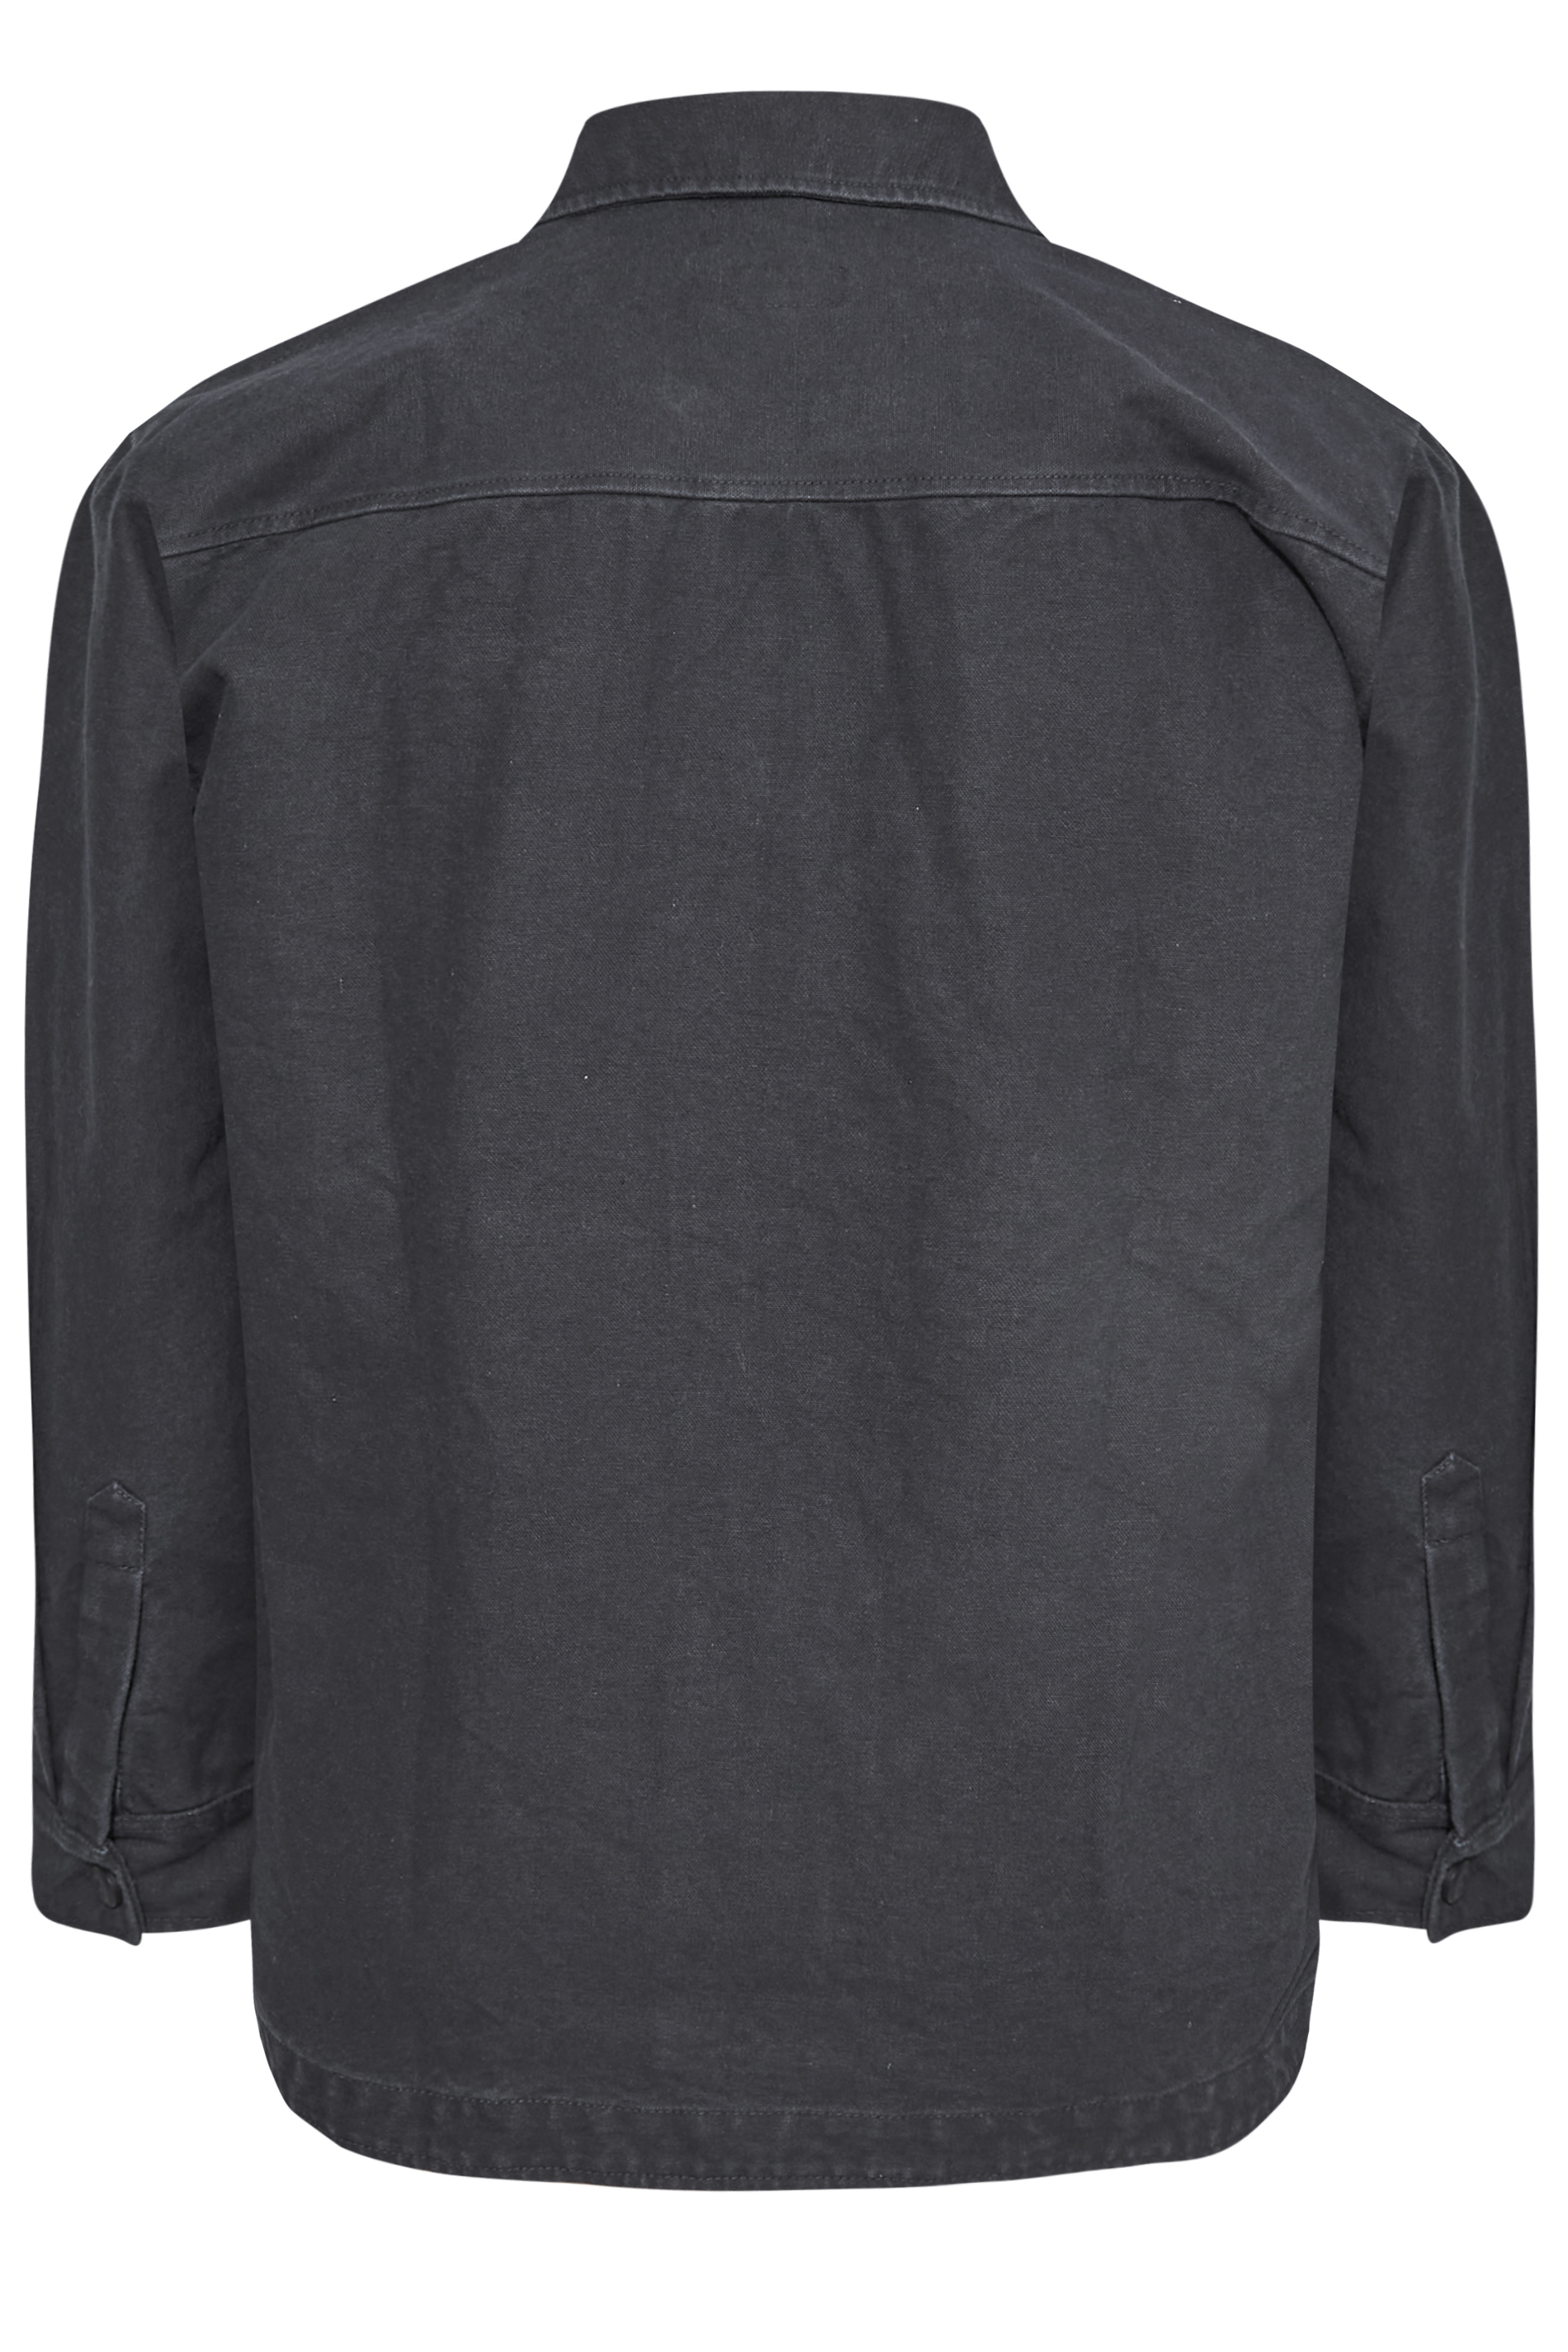 BadRhino Big & Tall Navy Blue Twill Overshirt Jacket | BadRhino 3